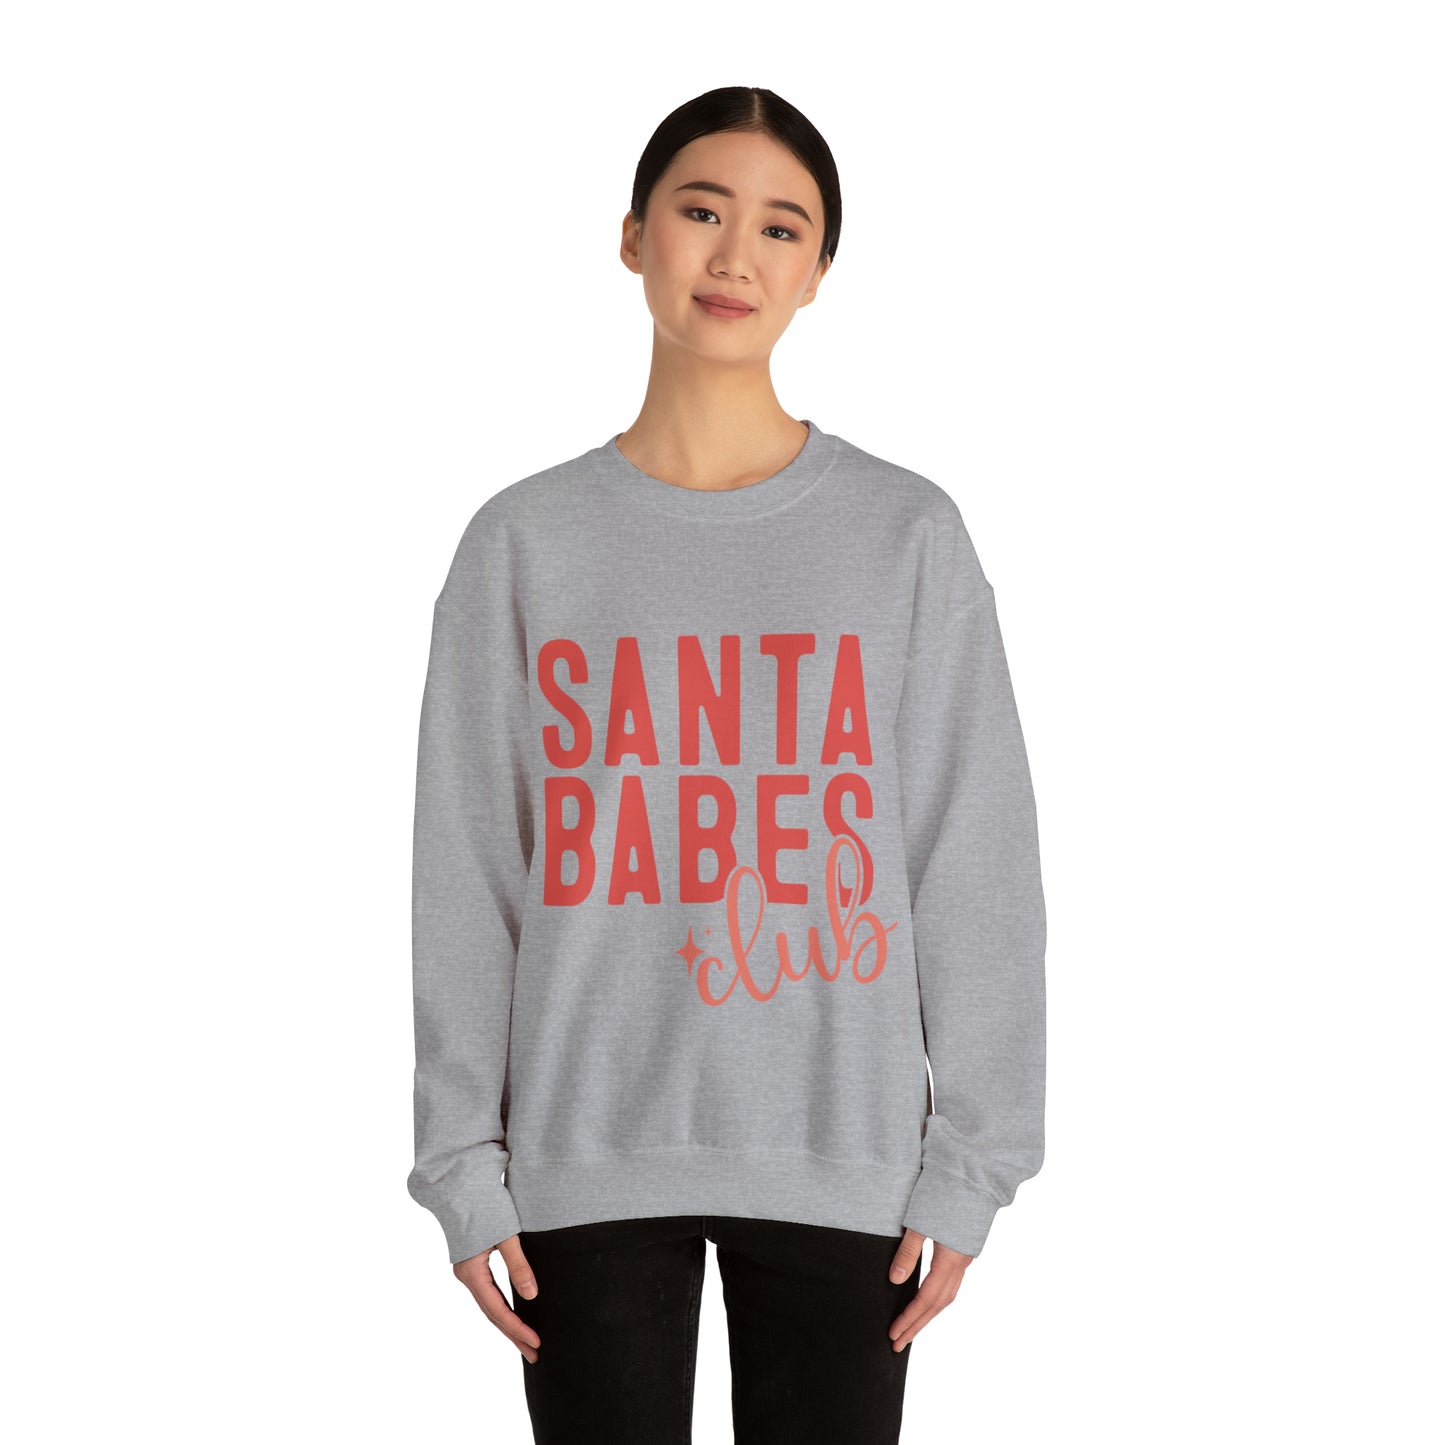 Santa Babes Club Women's Christmas Crewneck Sweatshirt